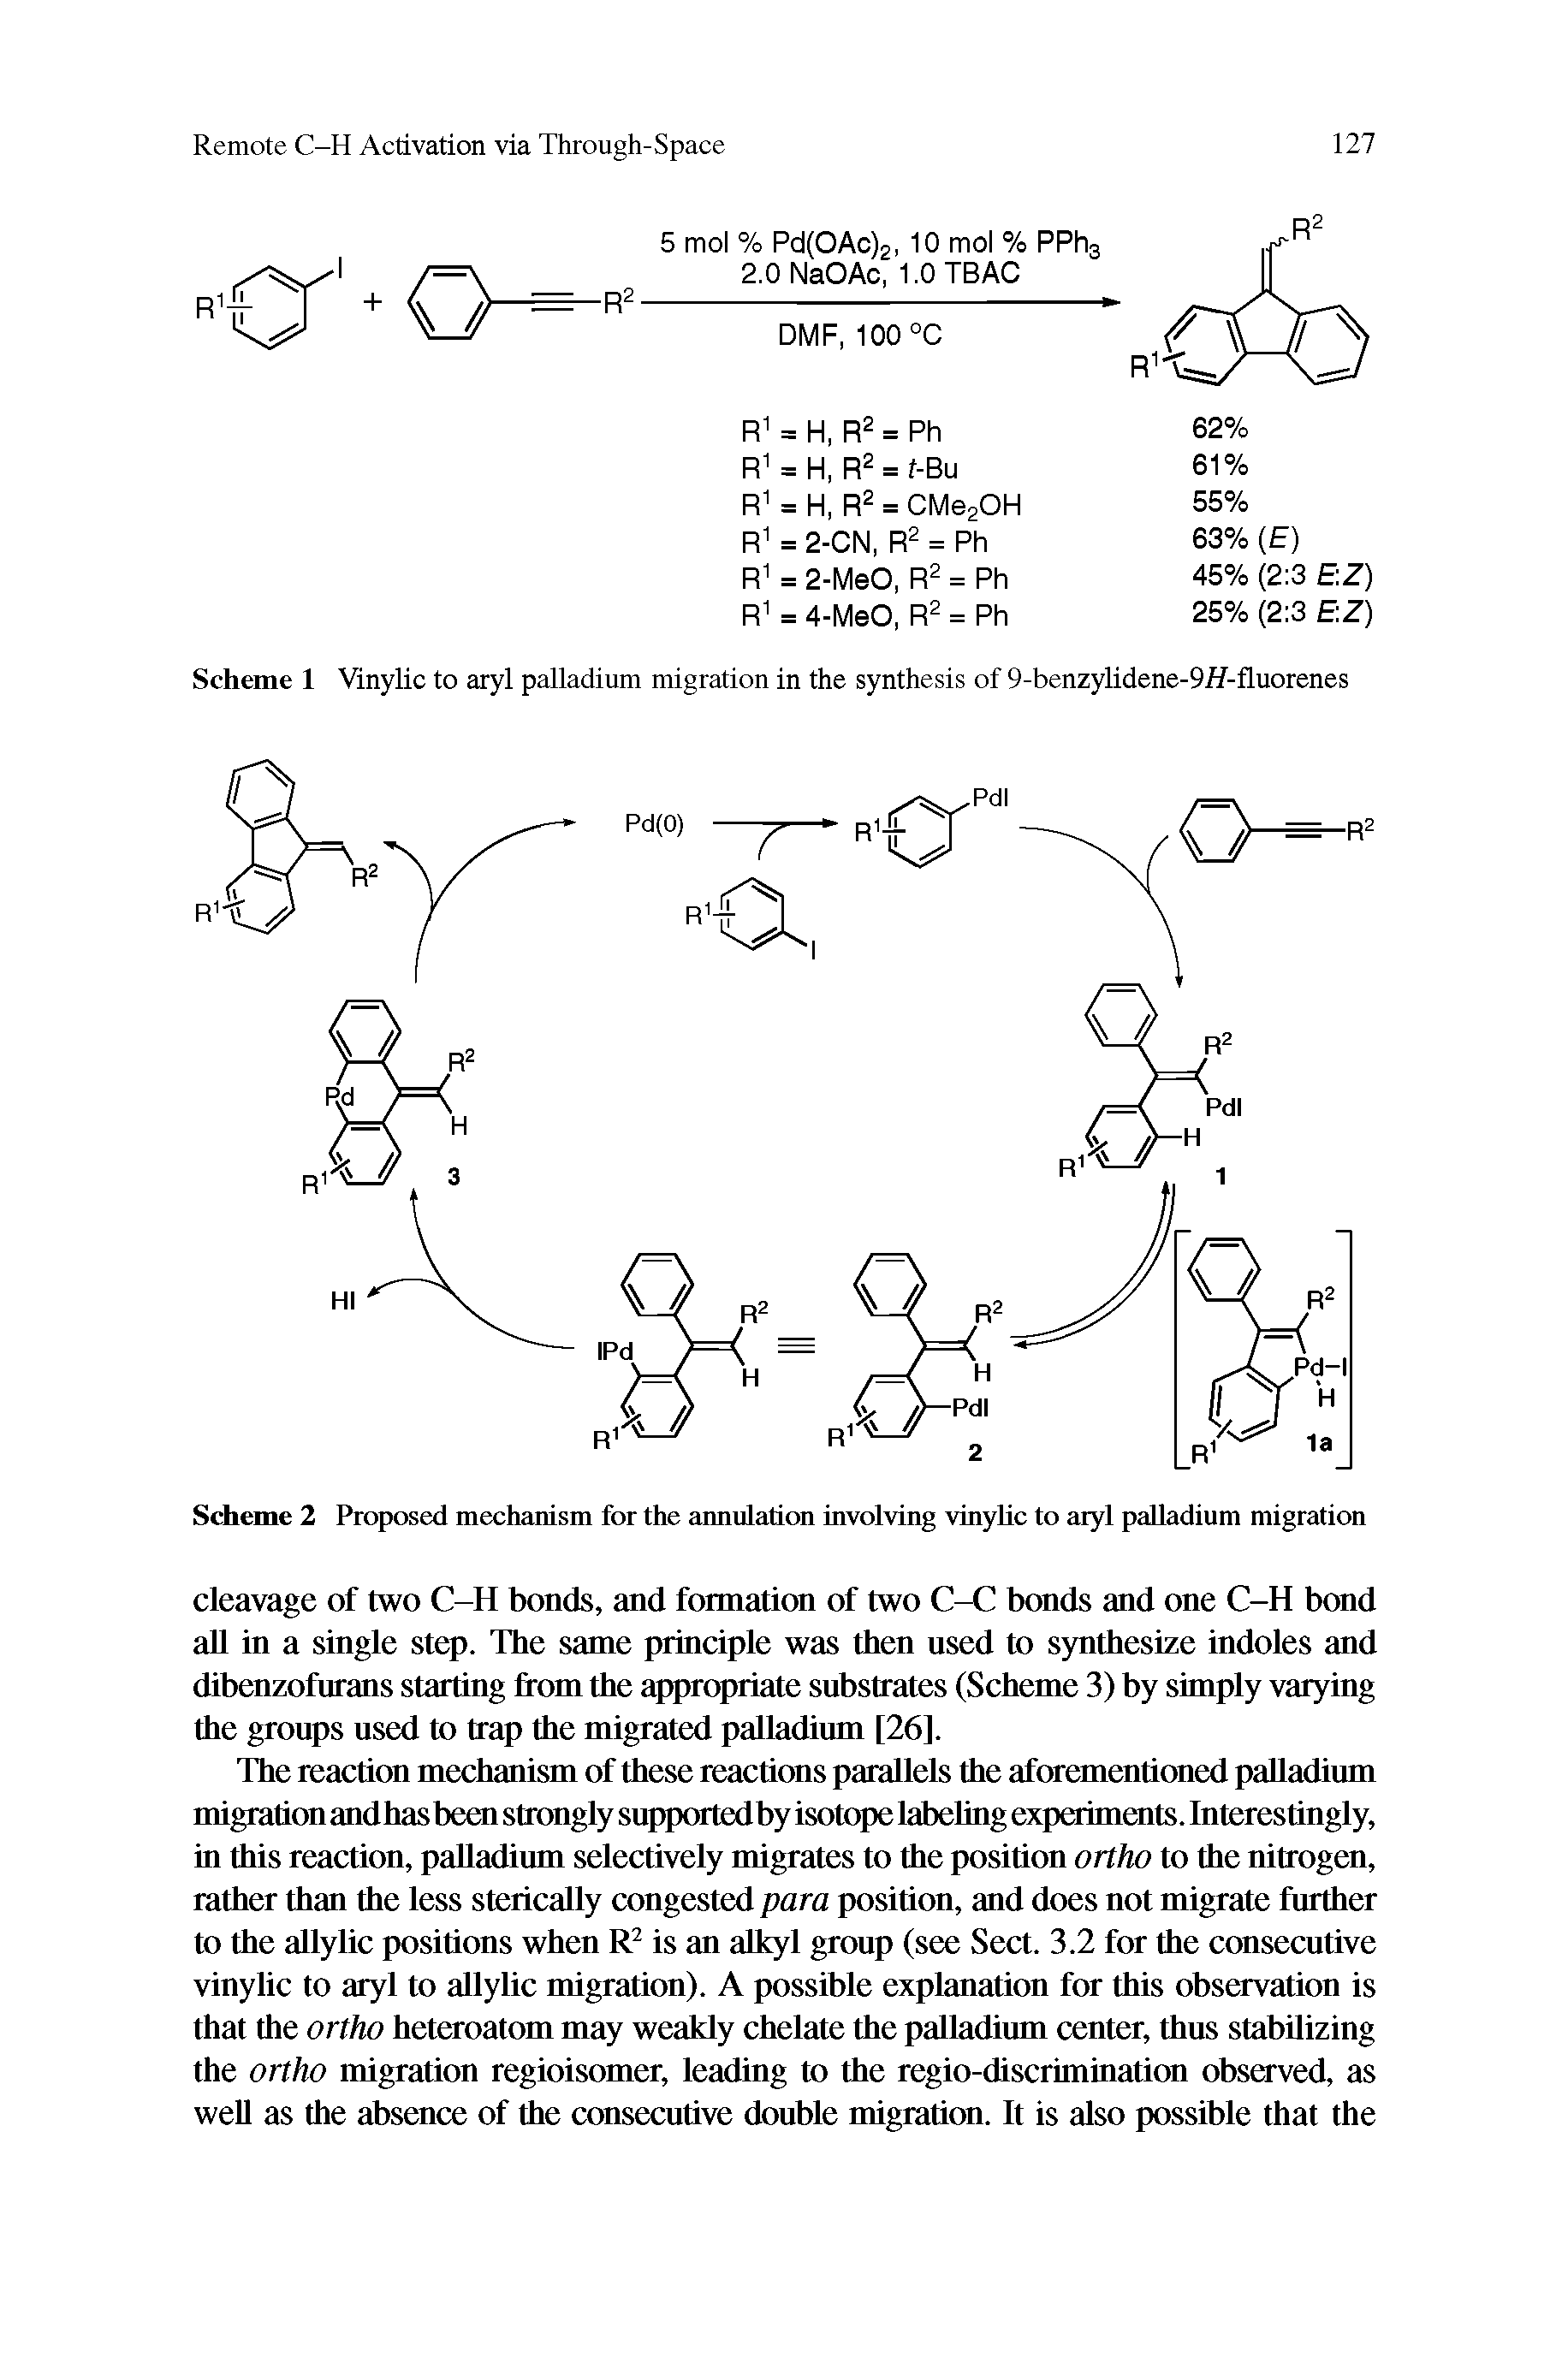 Scheme 1 Vinylic to aryl palladium migration in the synthesis of 9-benzylidene-9/f-fluorenes...